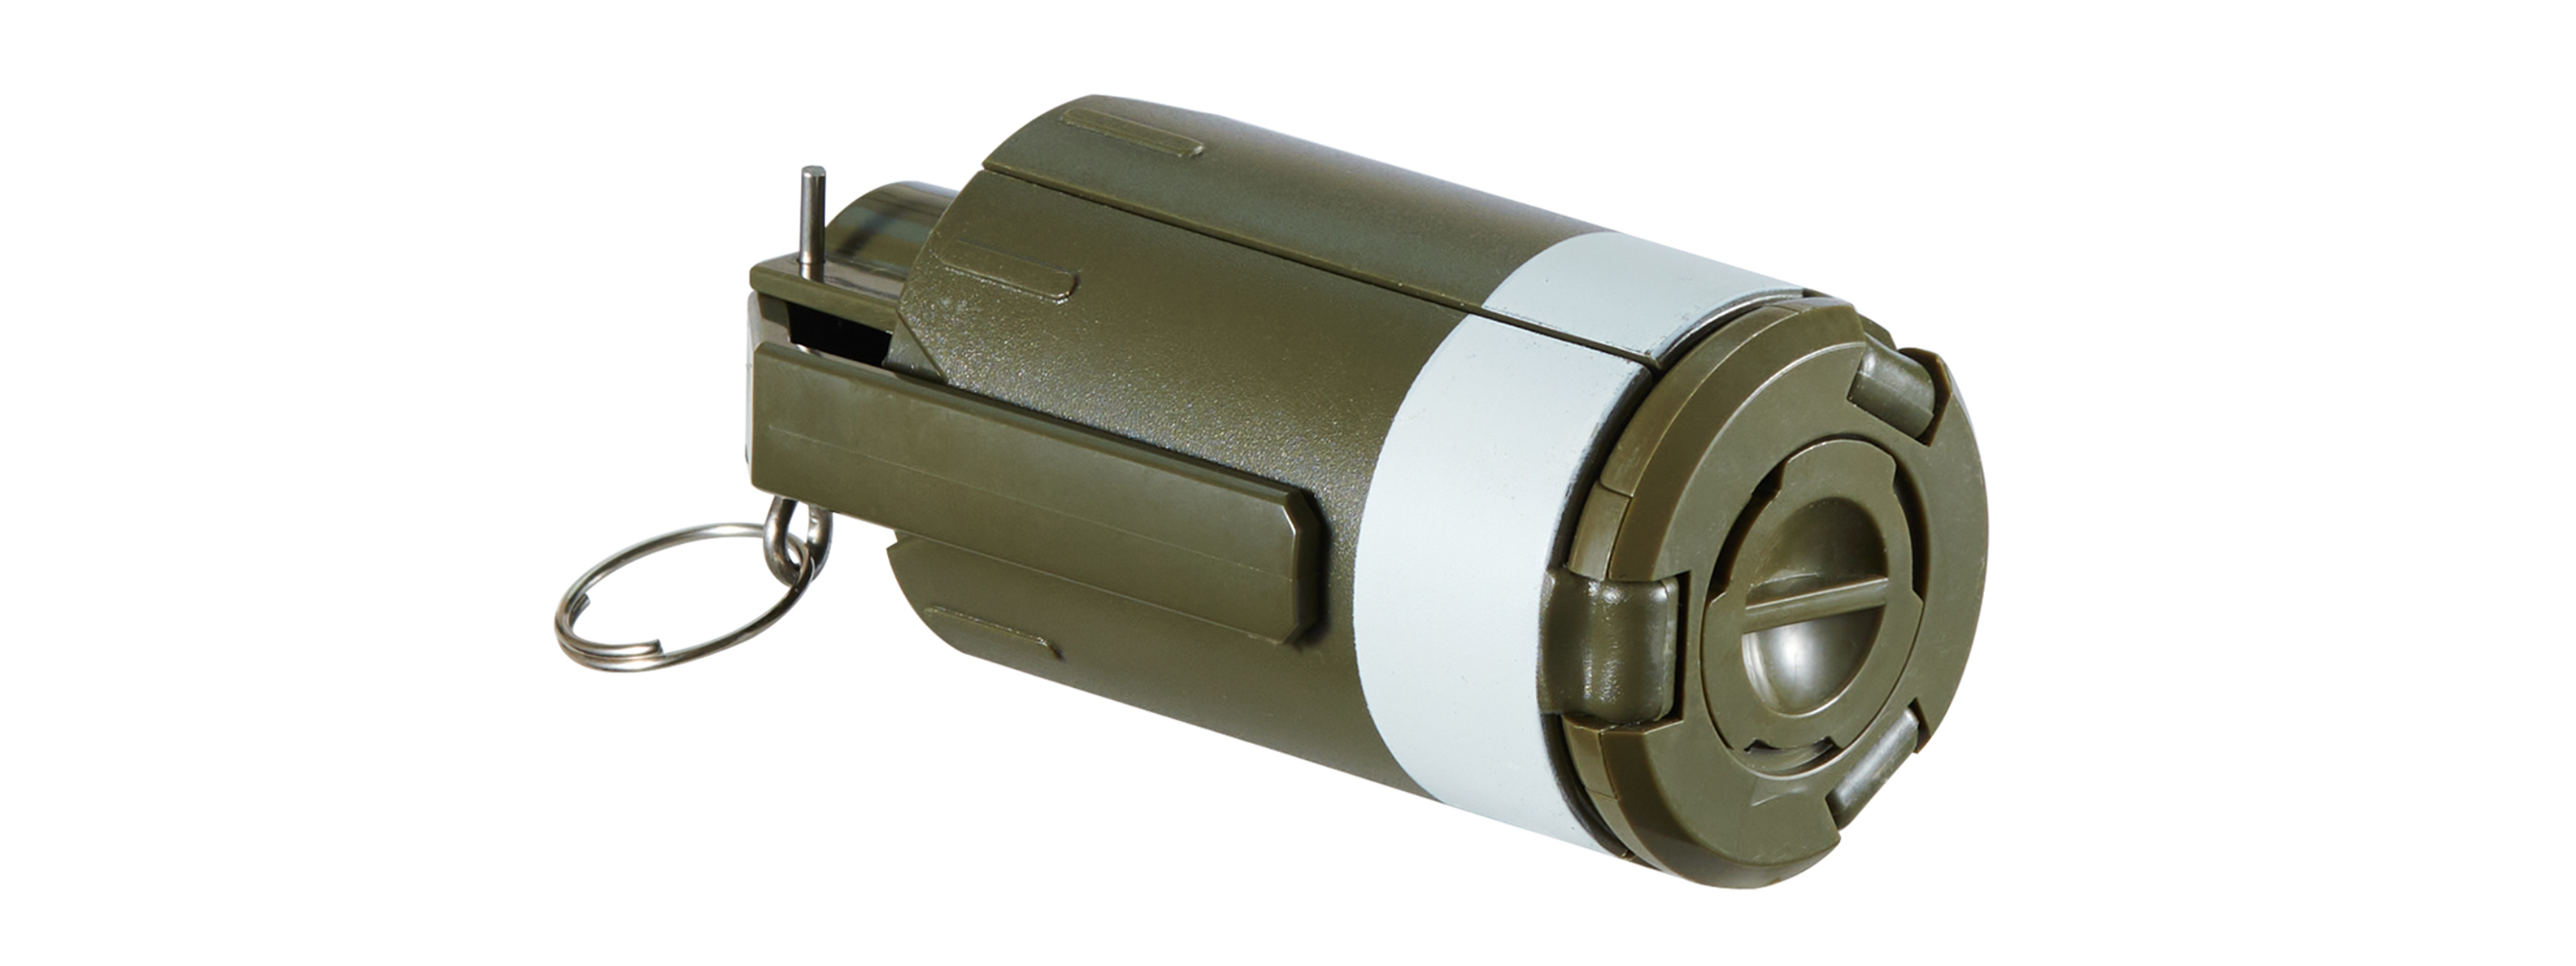 Lancer Tactical M18 Spring Powered Impact Airsoft Grenade